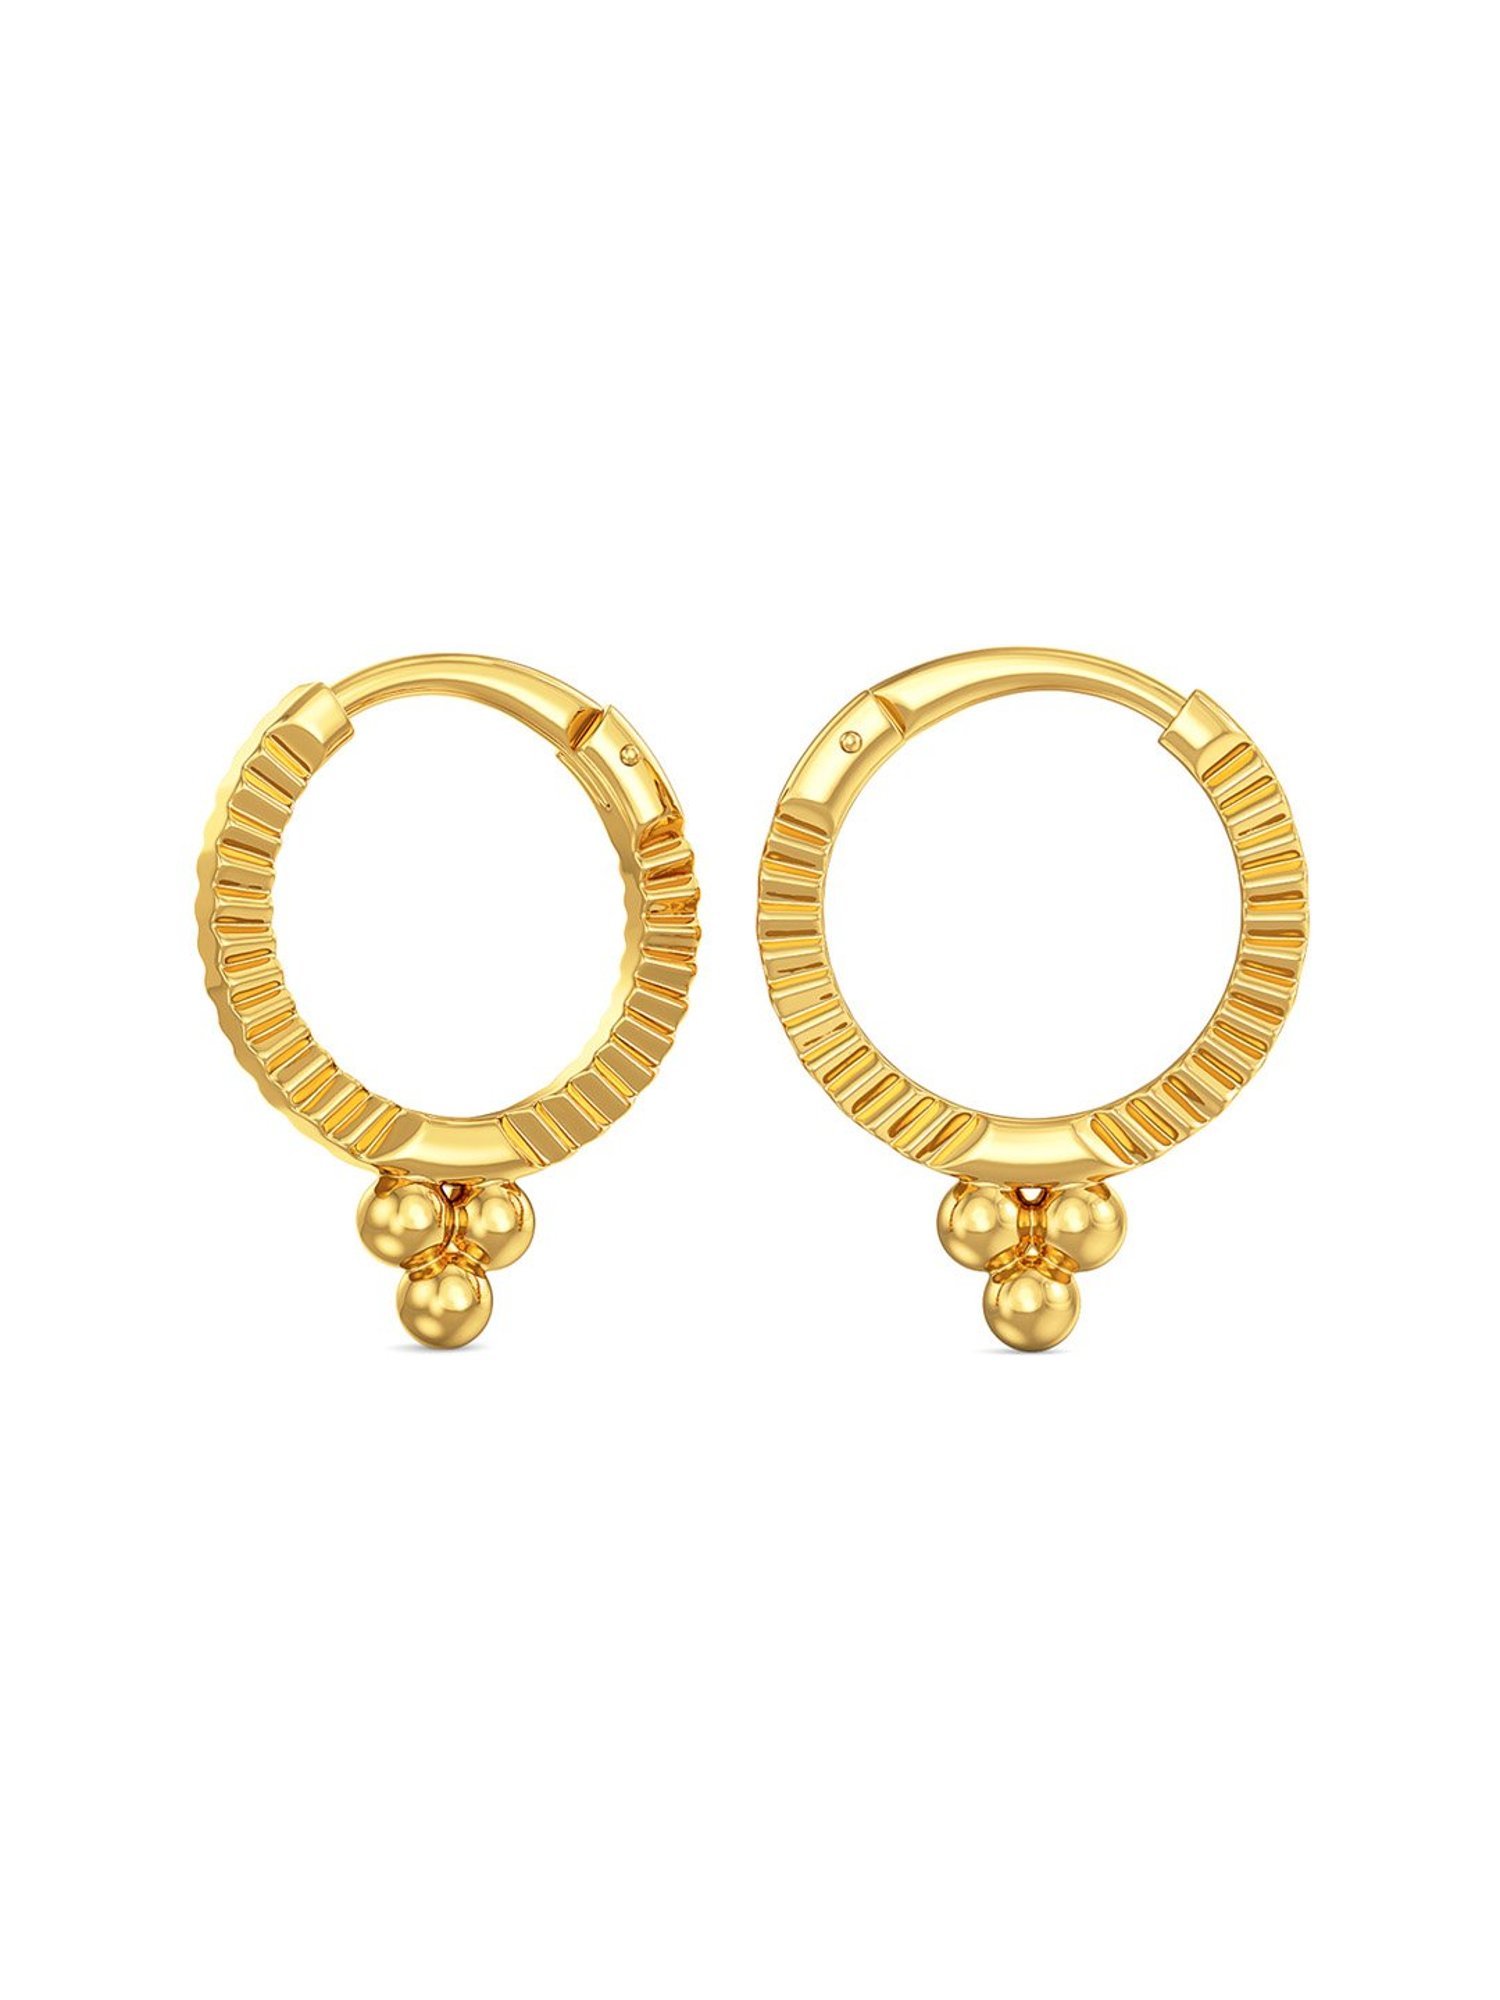 Baby earrings | Gold earrings models, Small earrings gold, Gold earrings  for kids